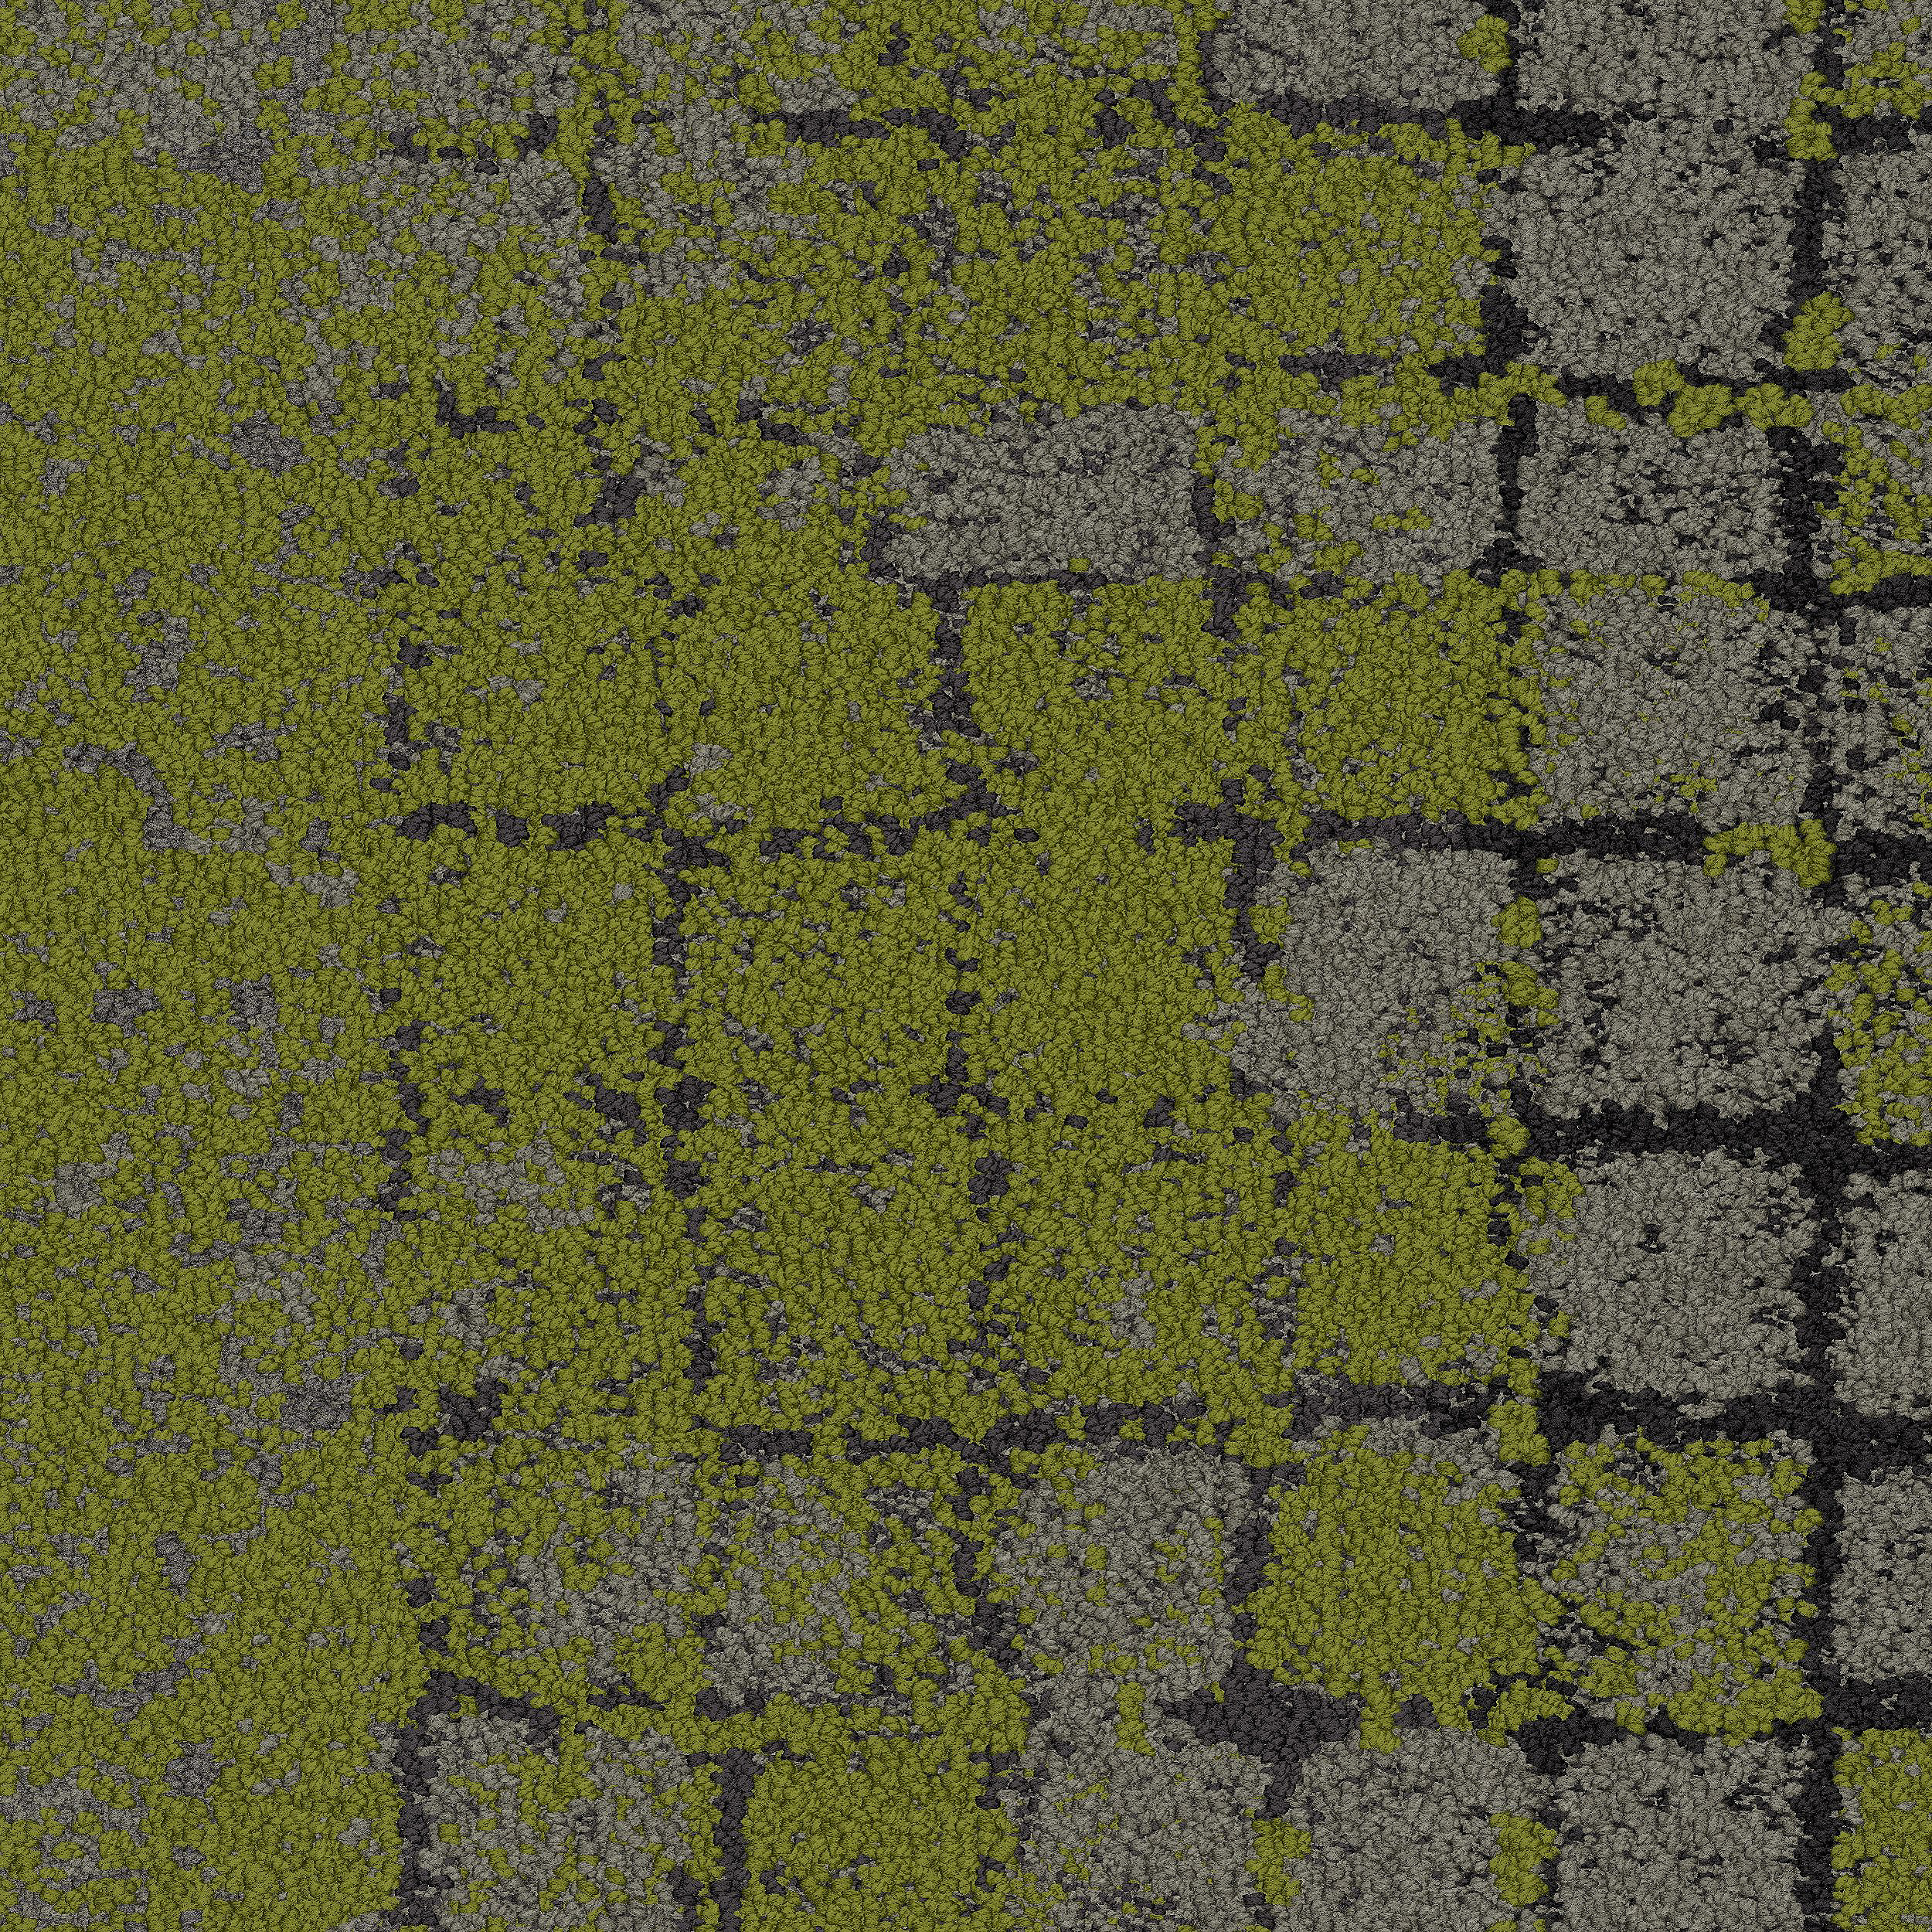 Moss Carpet Tile In Flint/Moss afbeeldingnummer 5